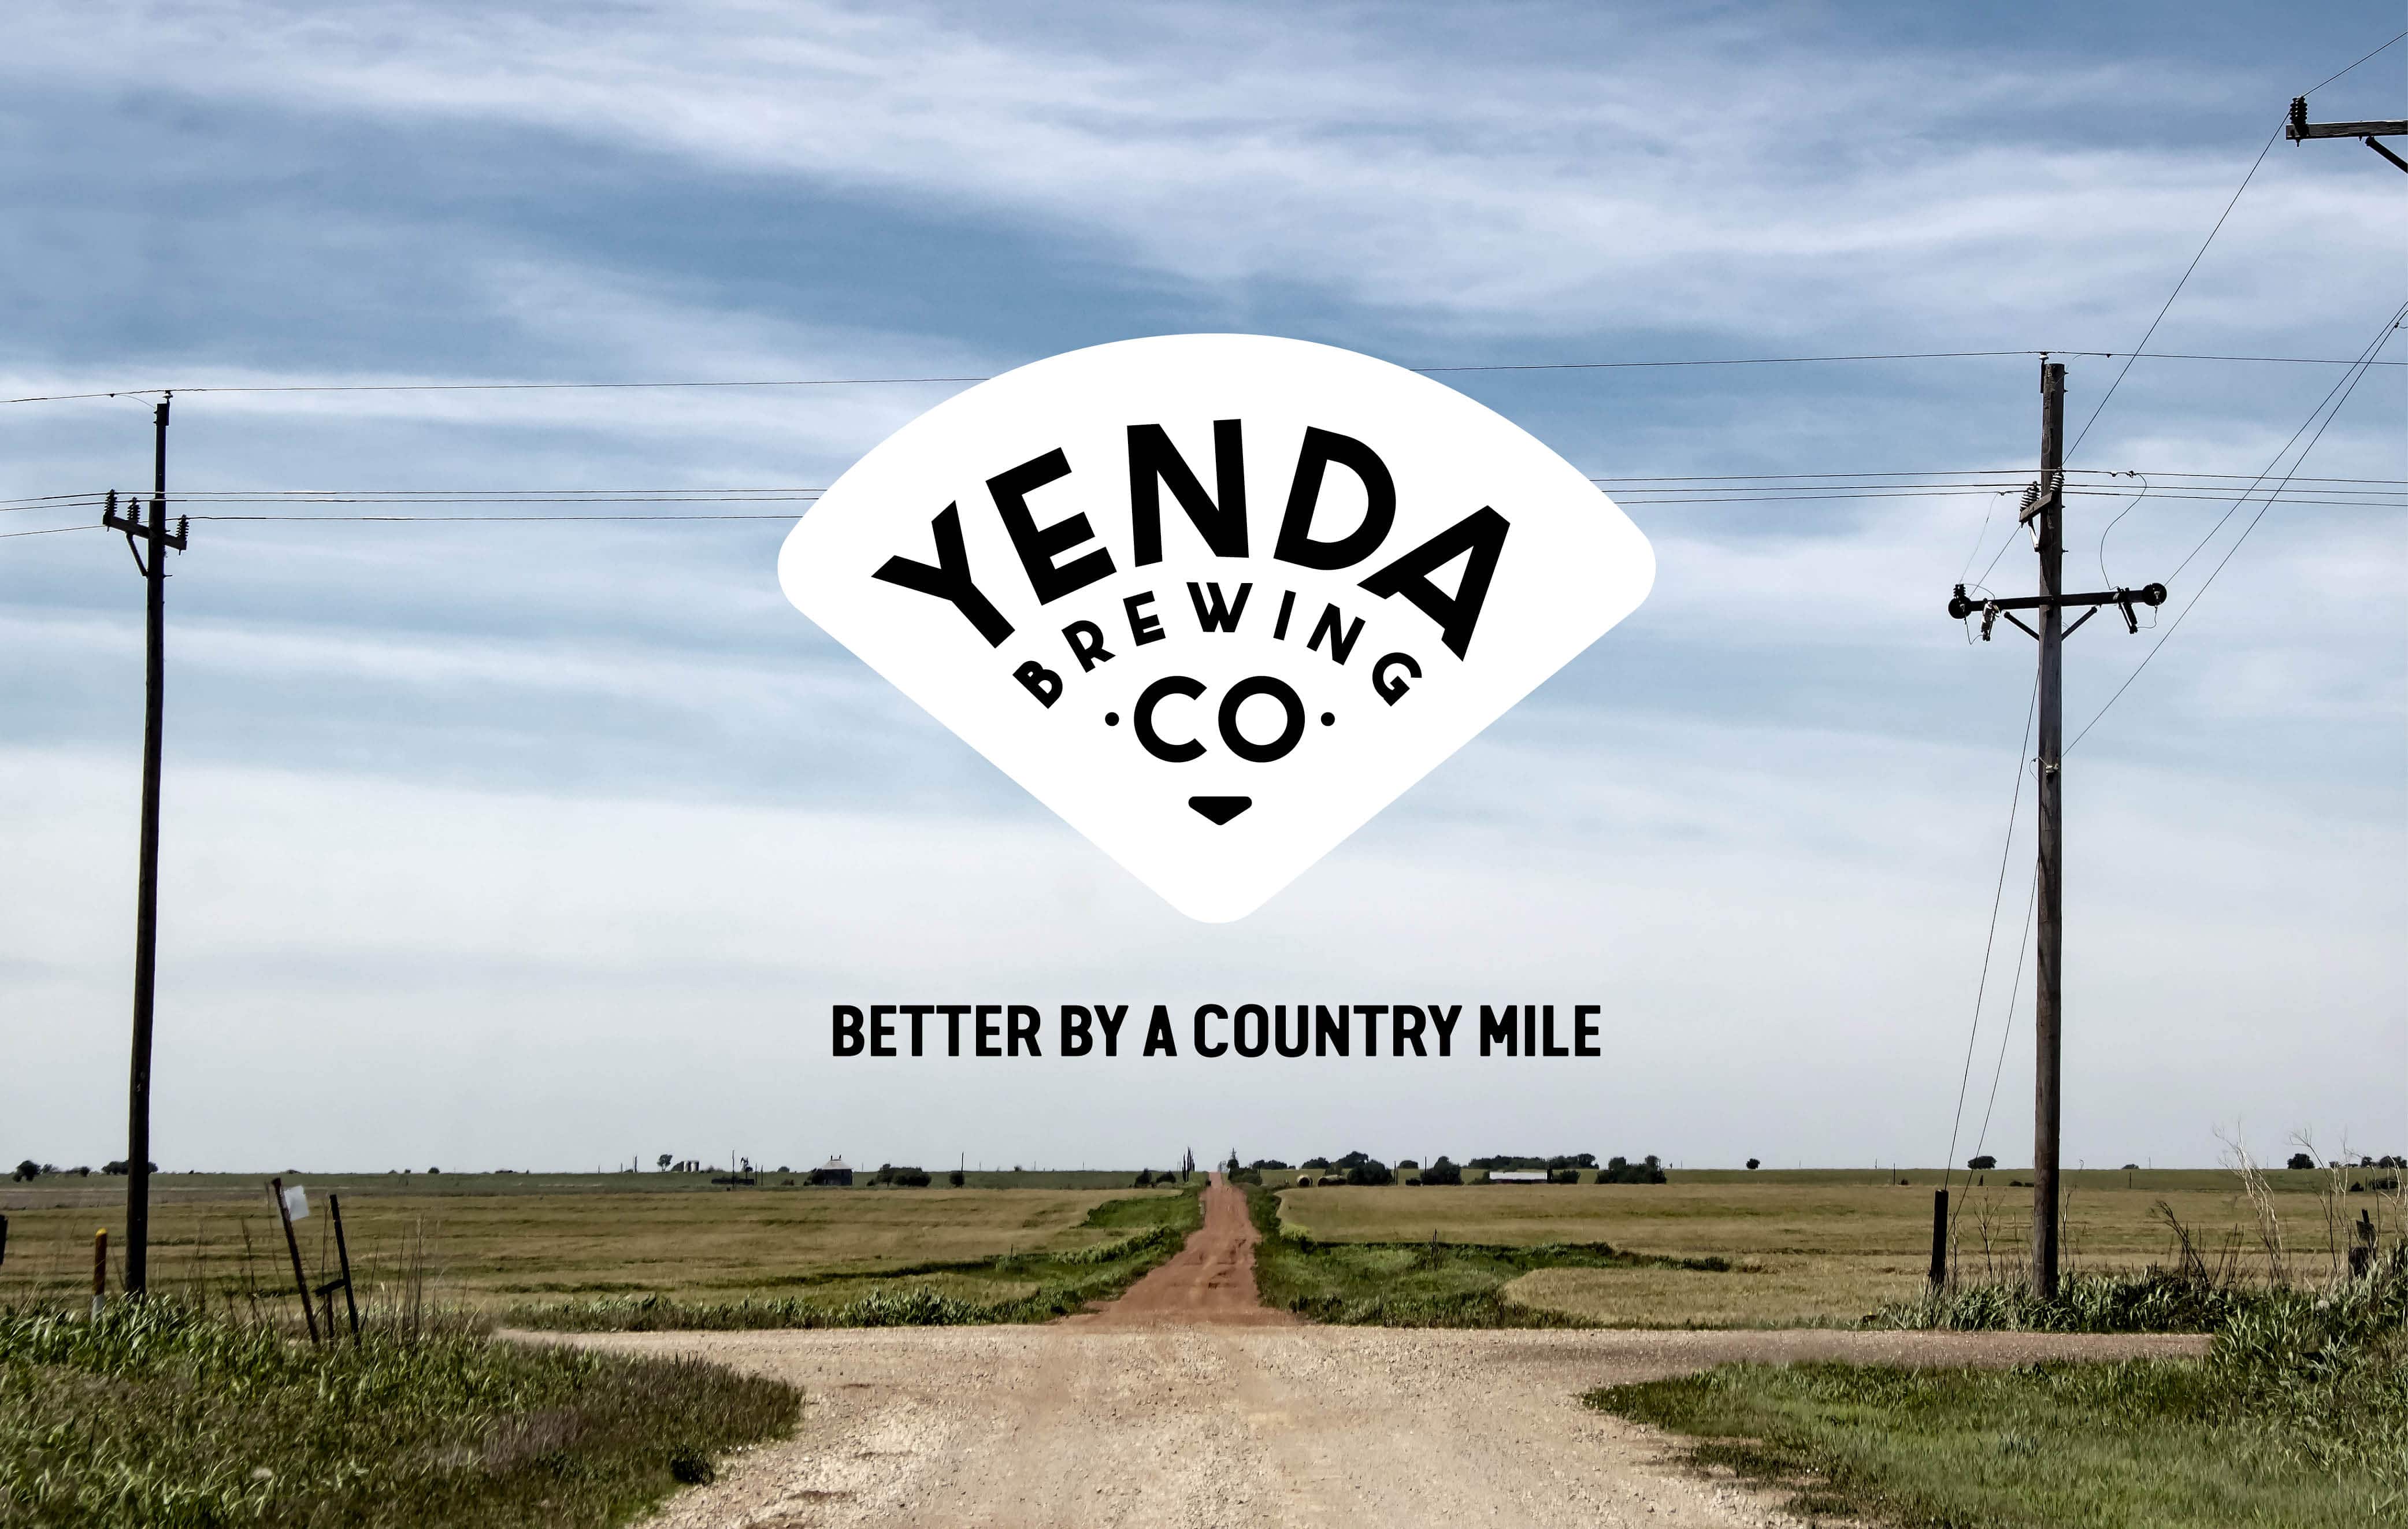 Yenda Brewing Co. Beer Tagline and Brand Development